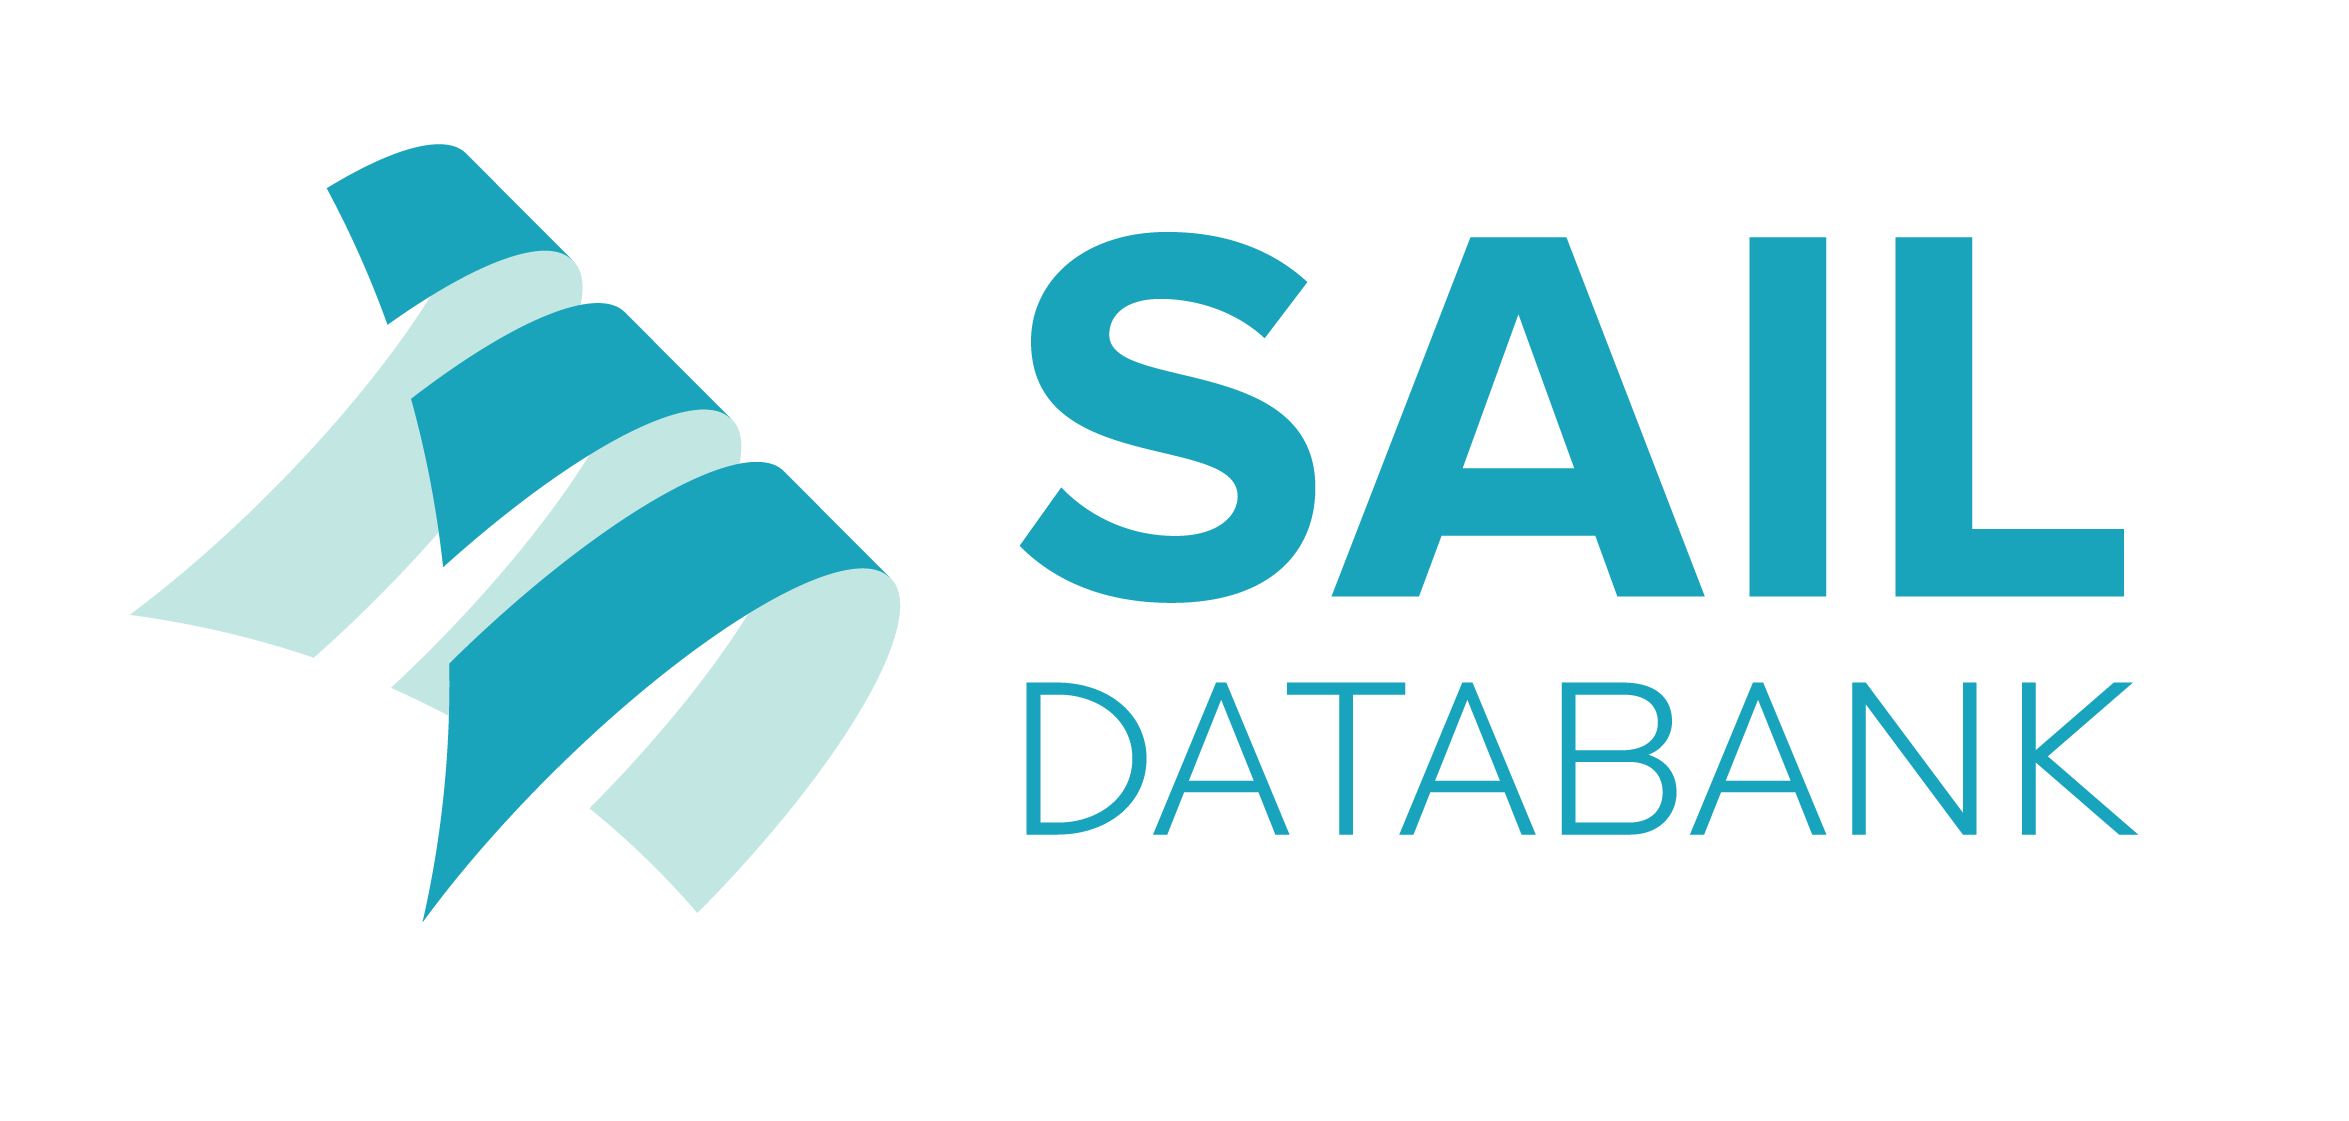 Logo of sail-databank